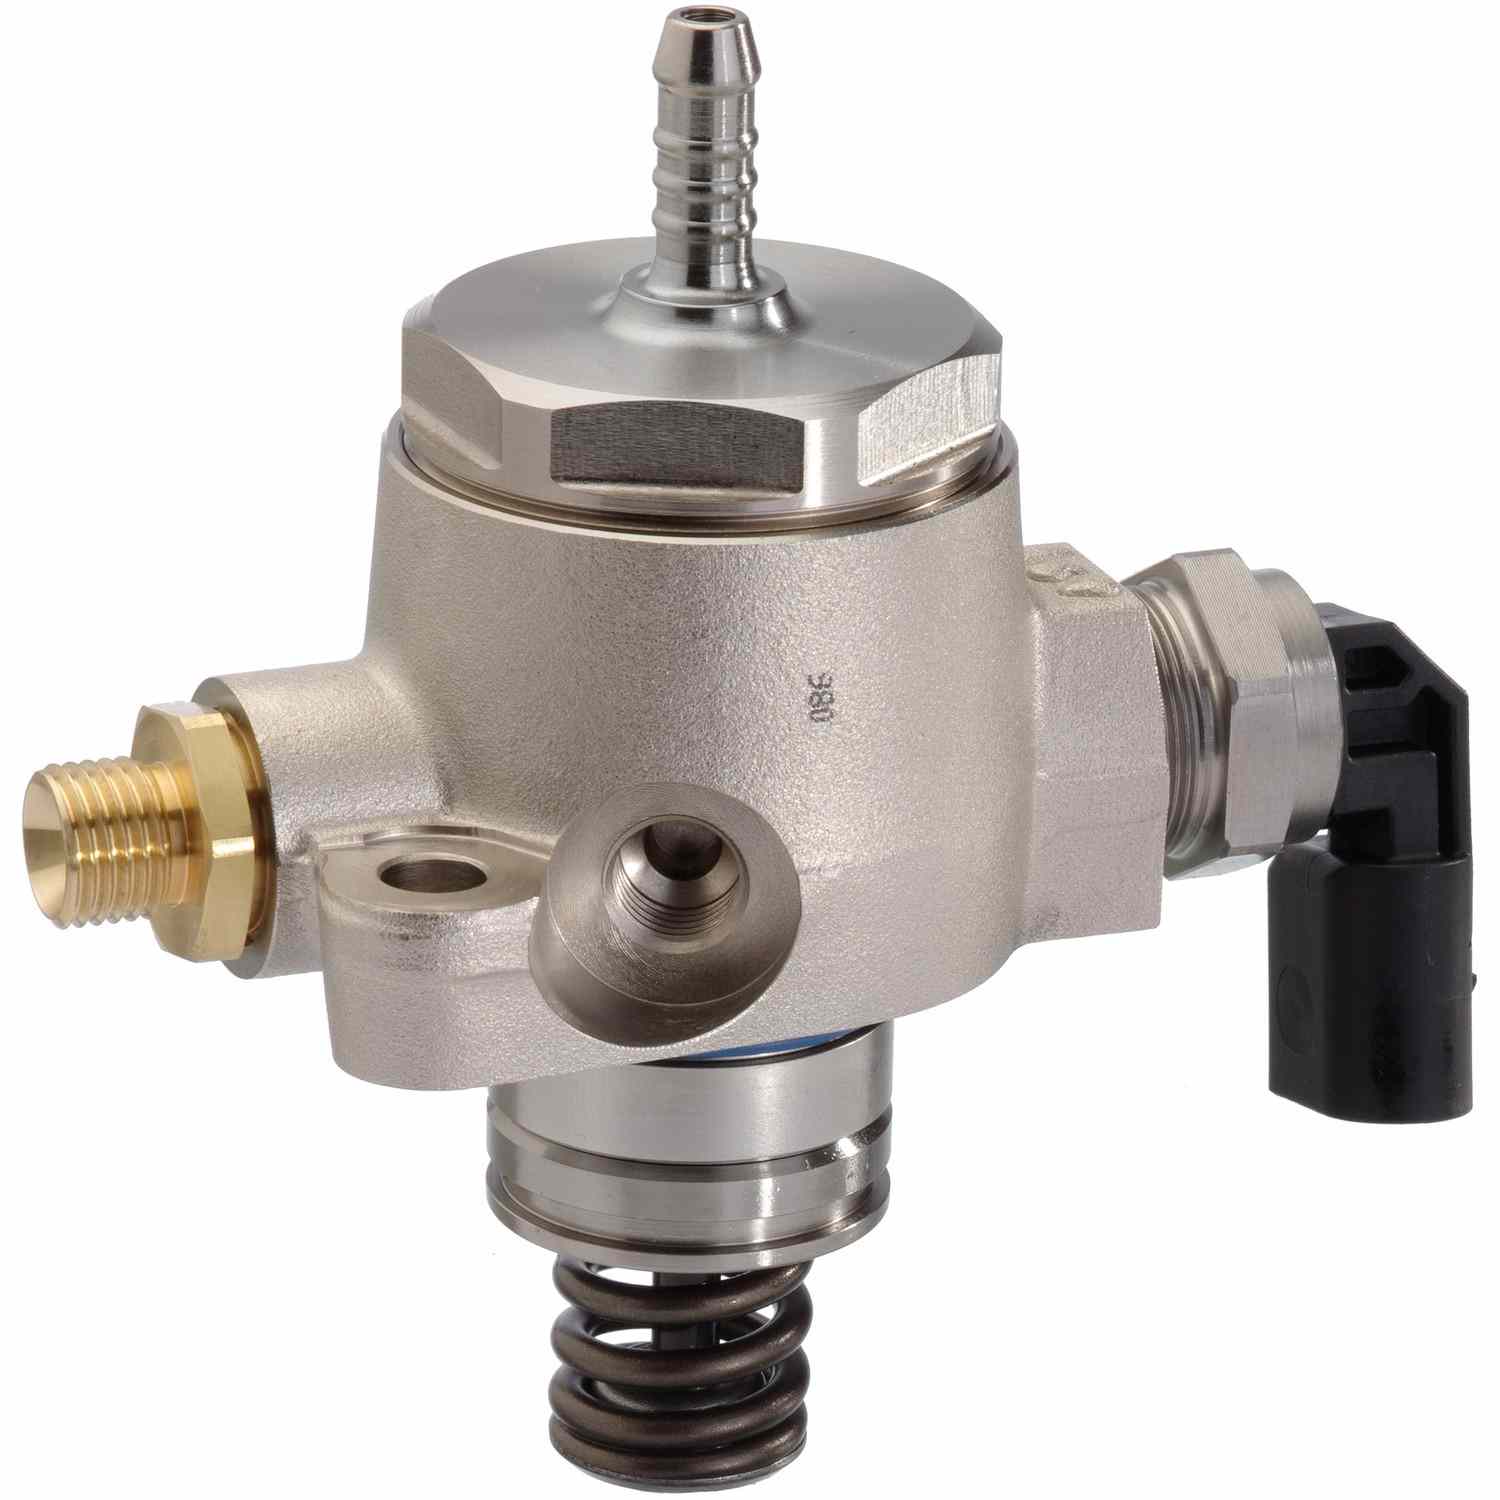 Pierburg Direct Injection High Pressure Fuel Pump 7.06032.19.0